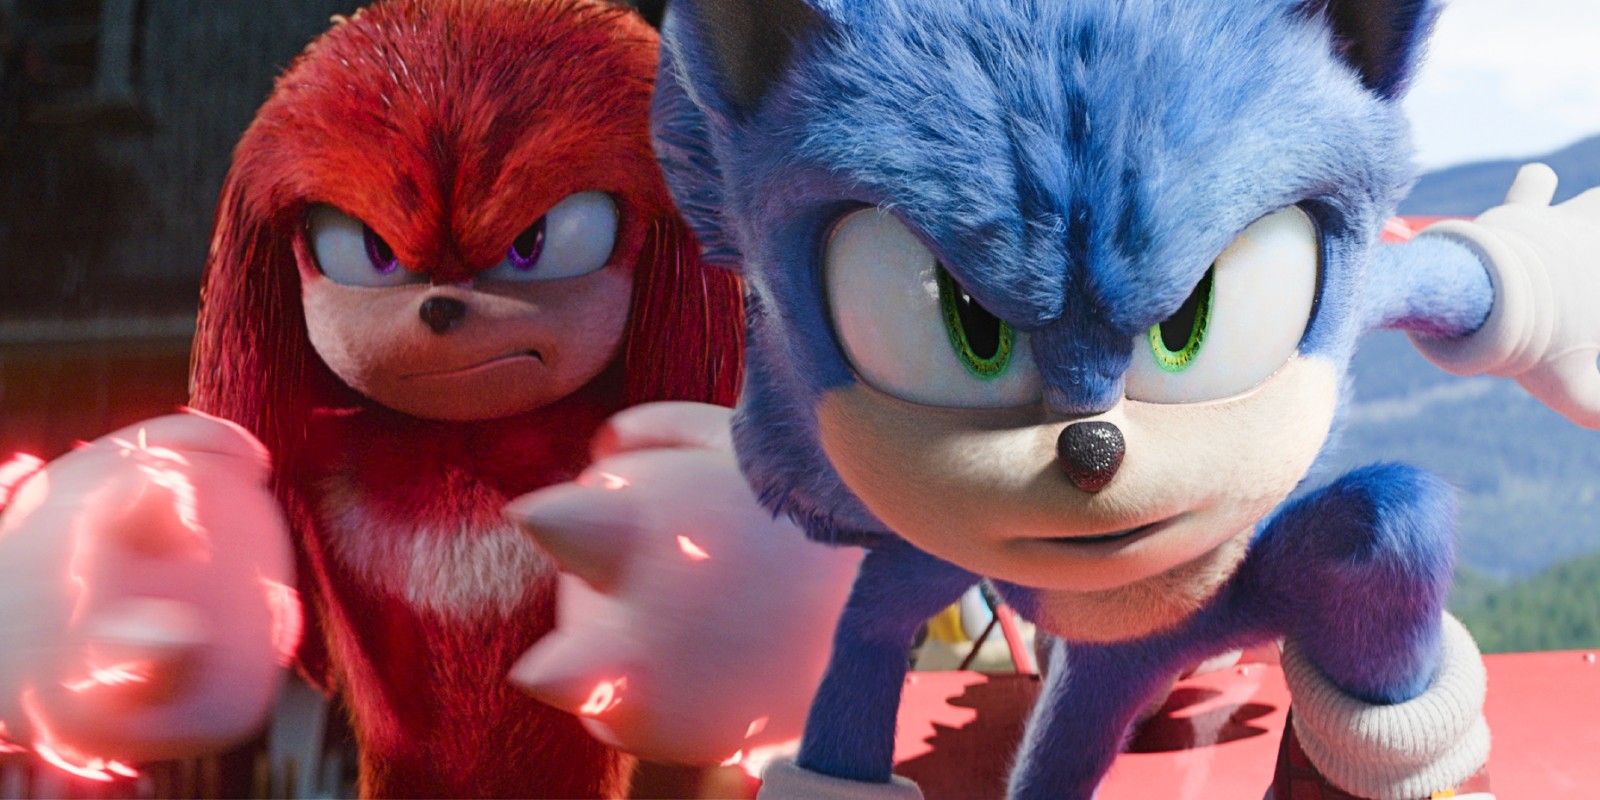 Sonic the Hedgehog Sets Mecha Knuckles Up As Its Next Major Villain